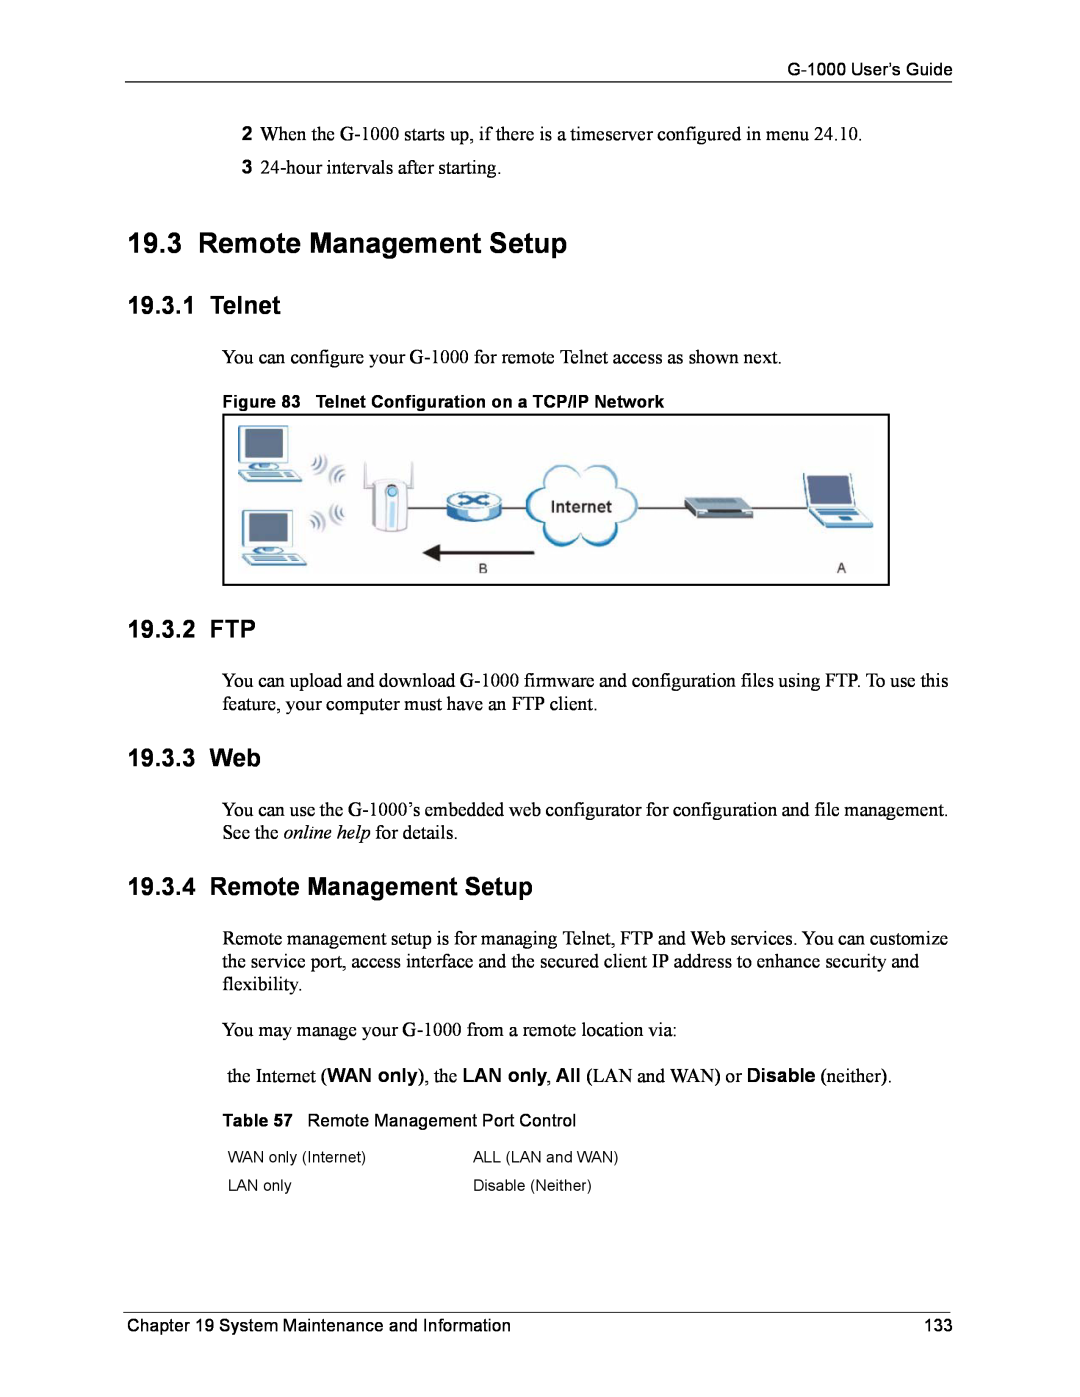 ZyXEL Communications G-1000 manual Remote Management Setup, Telnet, 19.3.2 FTP, 19.3.3 Web 